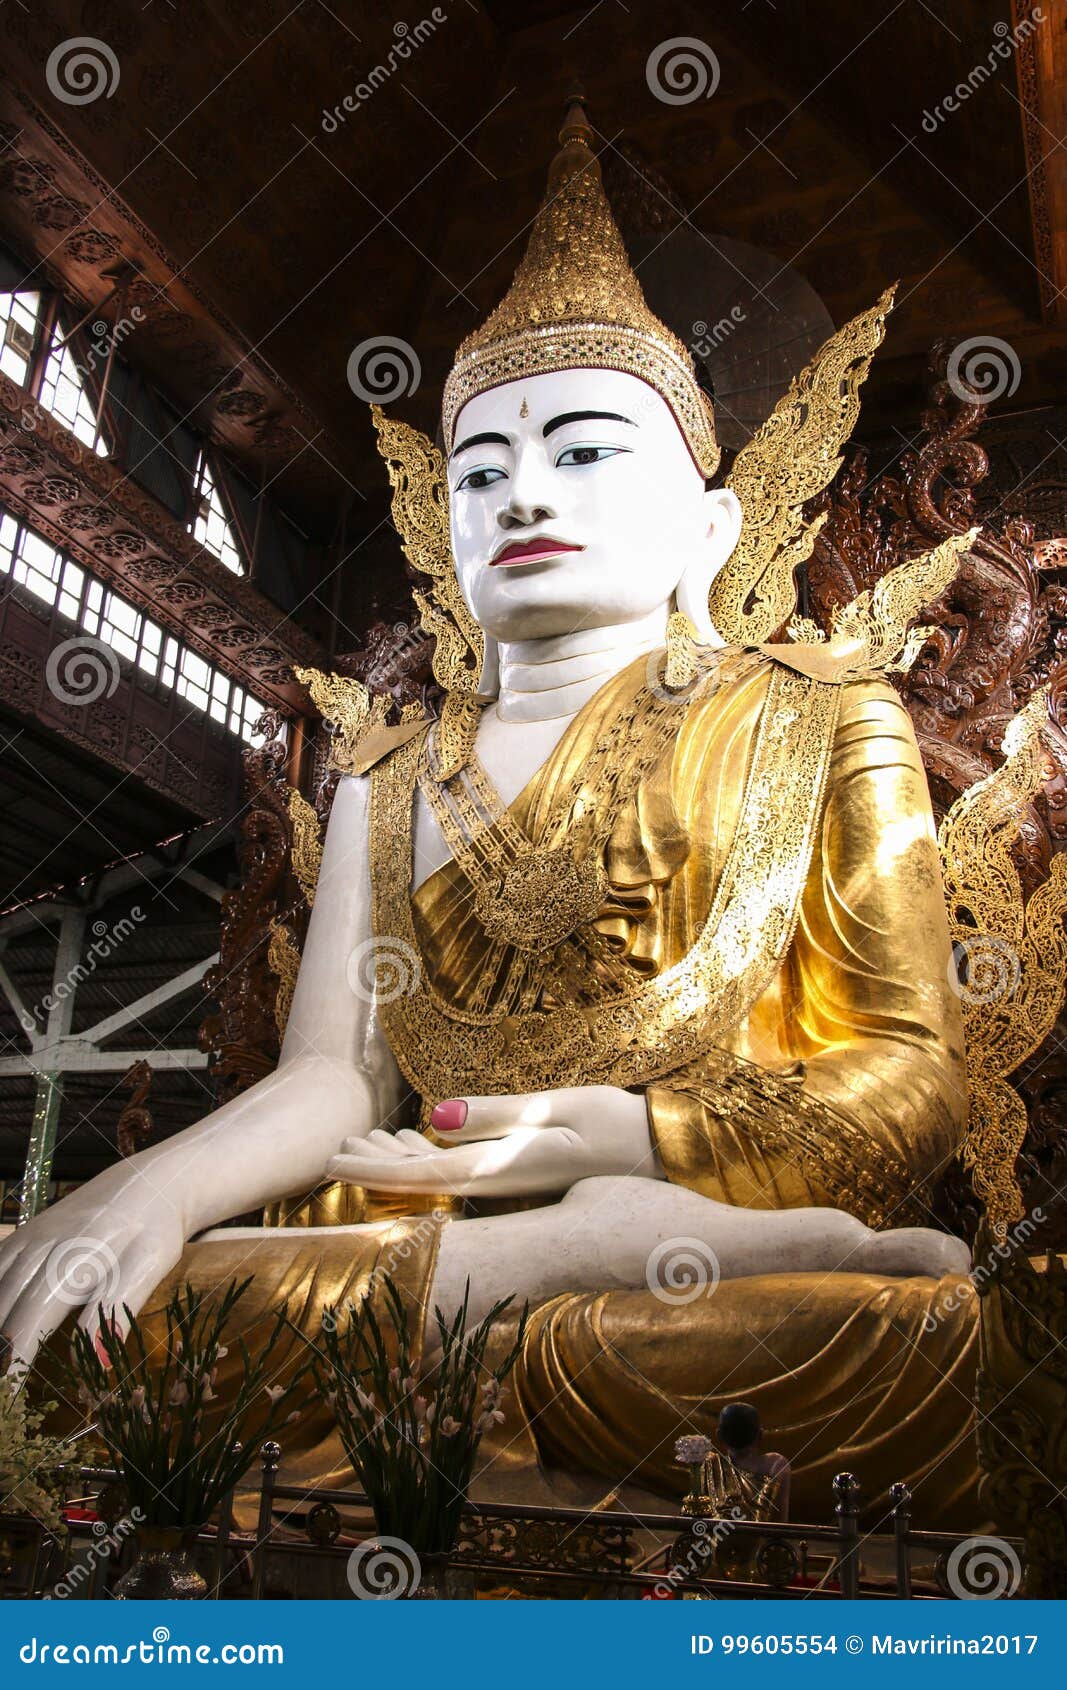 buddha in gold, royal clothes,ngar htat gyee pagoda,yangon, myanmar(burma)